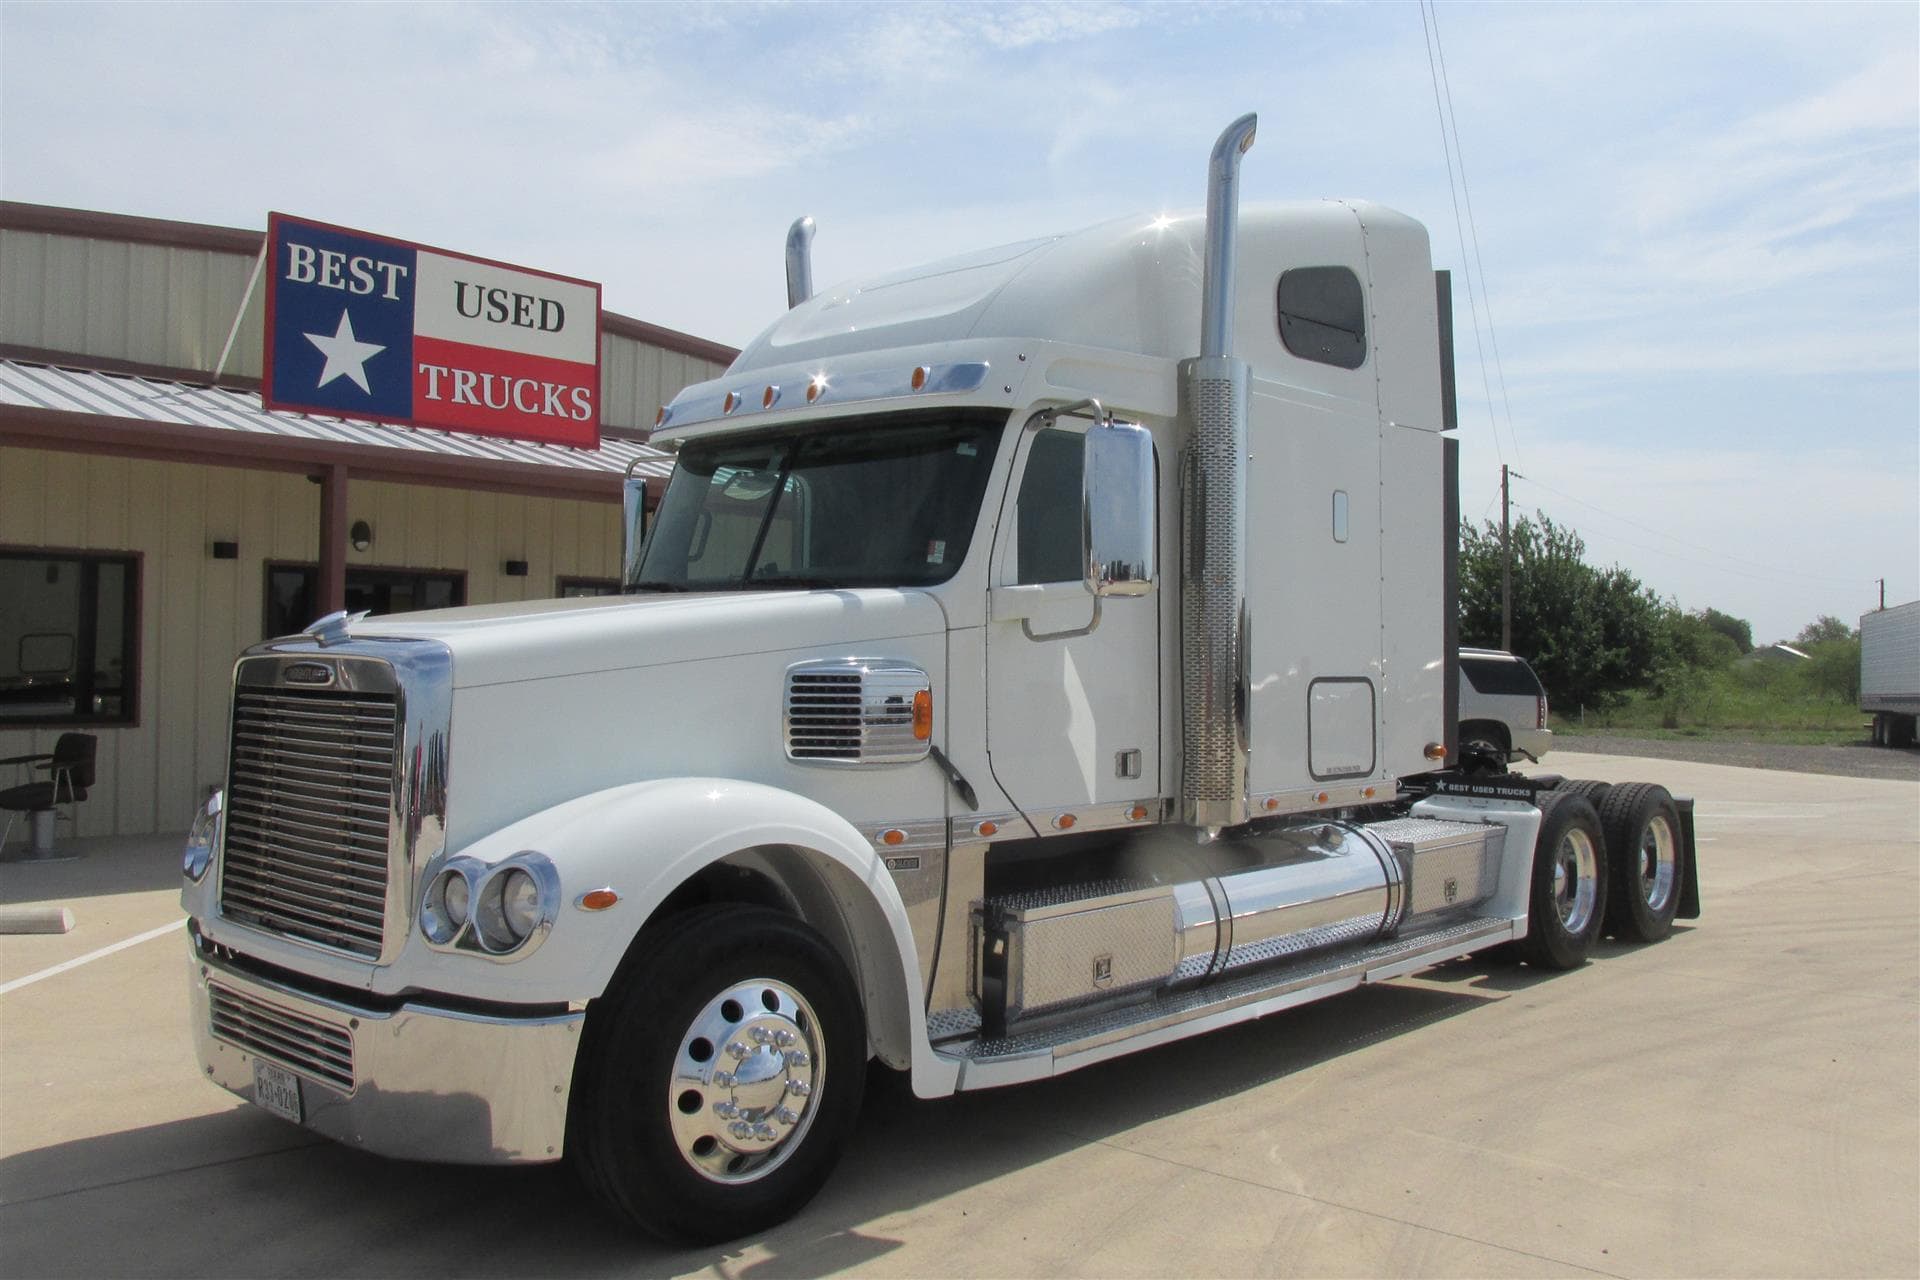 Best Used Trucks - Rhome, TX, US, used box trucks for sale